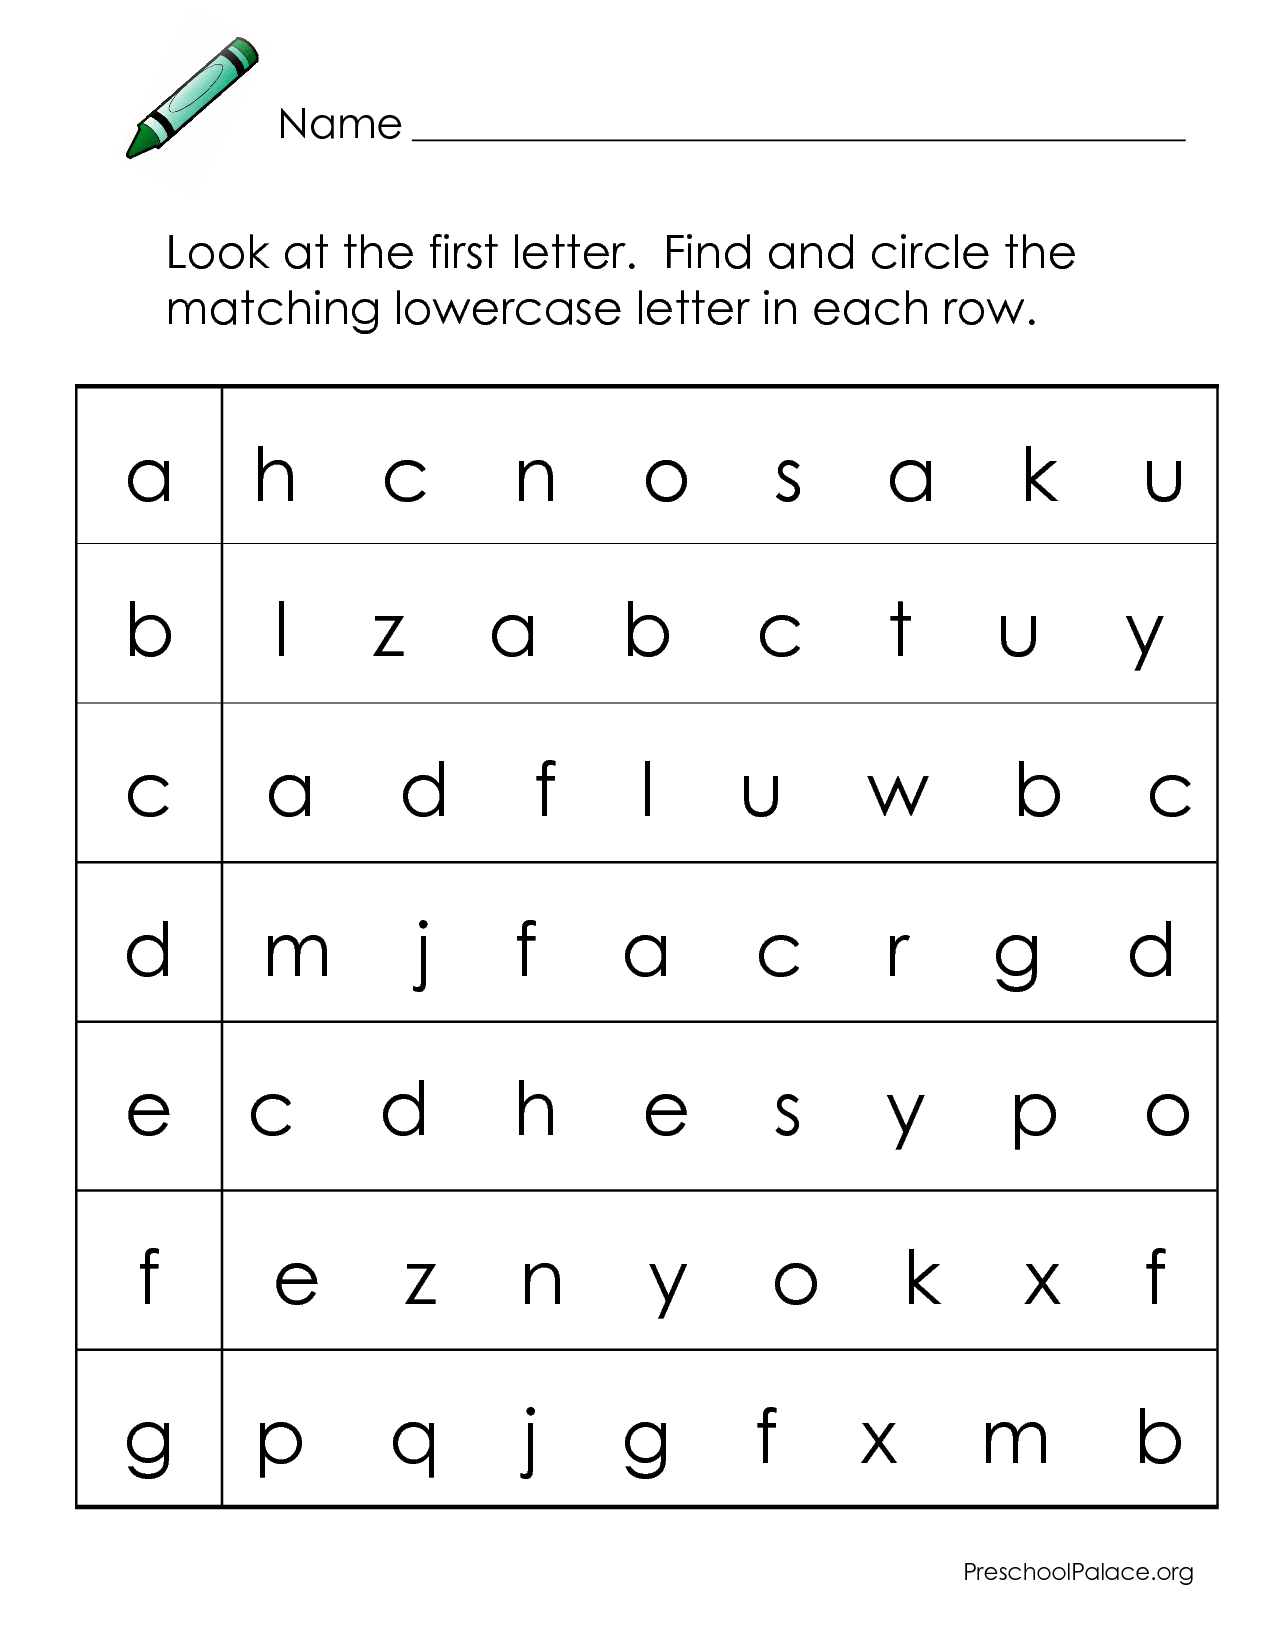 Alphabet Worksheets For Preschoolers | Abcs - Letter pertaining to Alphabet A Worksheets For Preschool